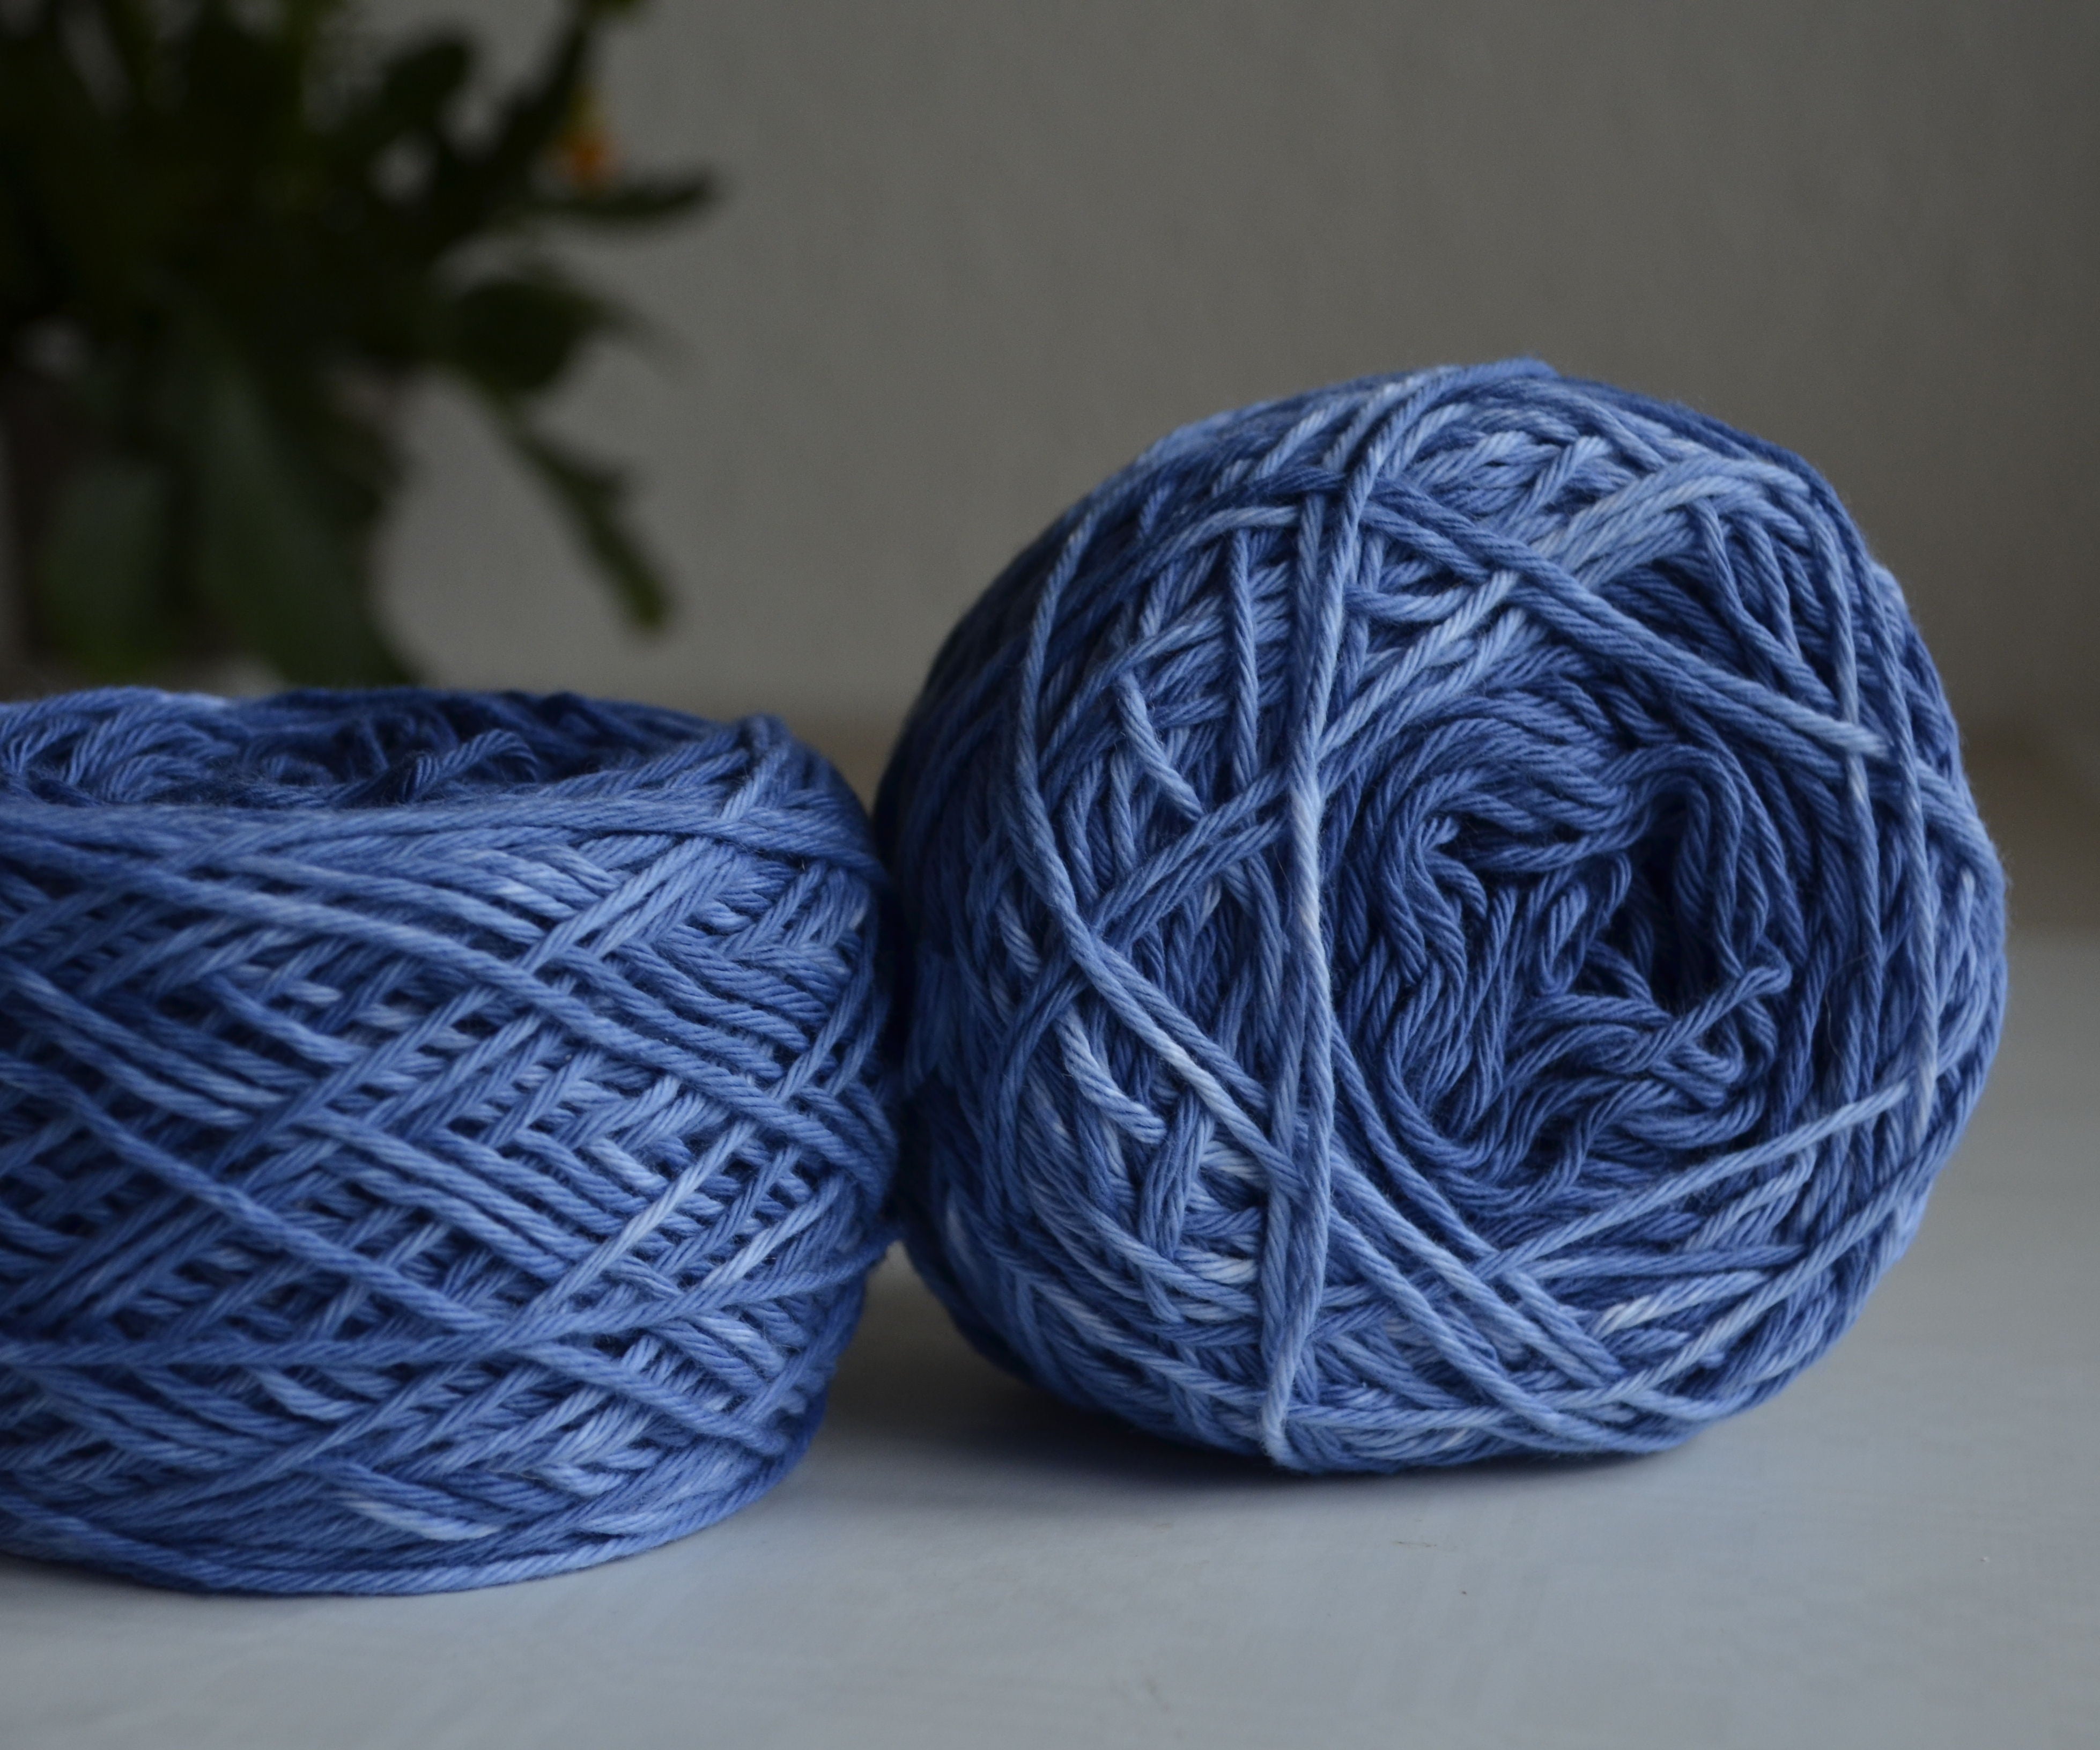 Easily Dye Cotton Yarn in a Speckled Gradient Using Batik Dyes